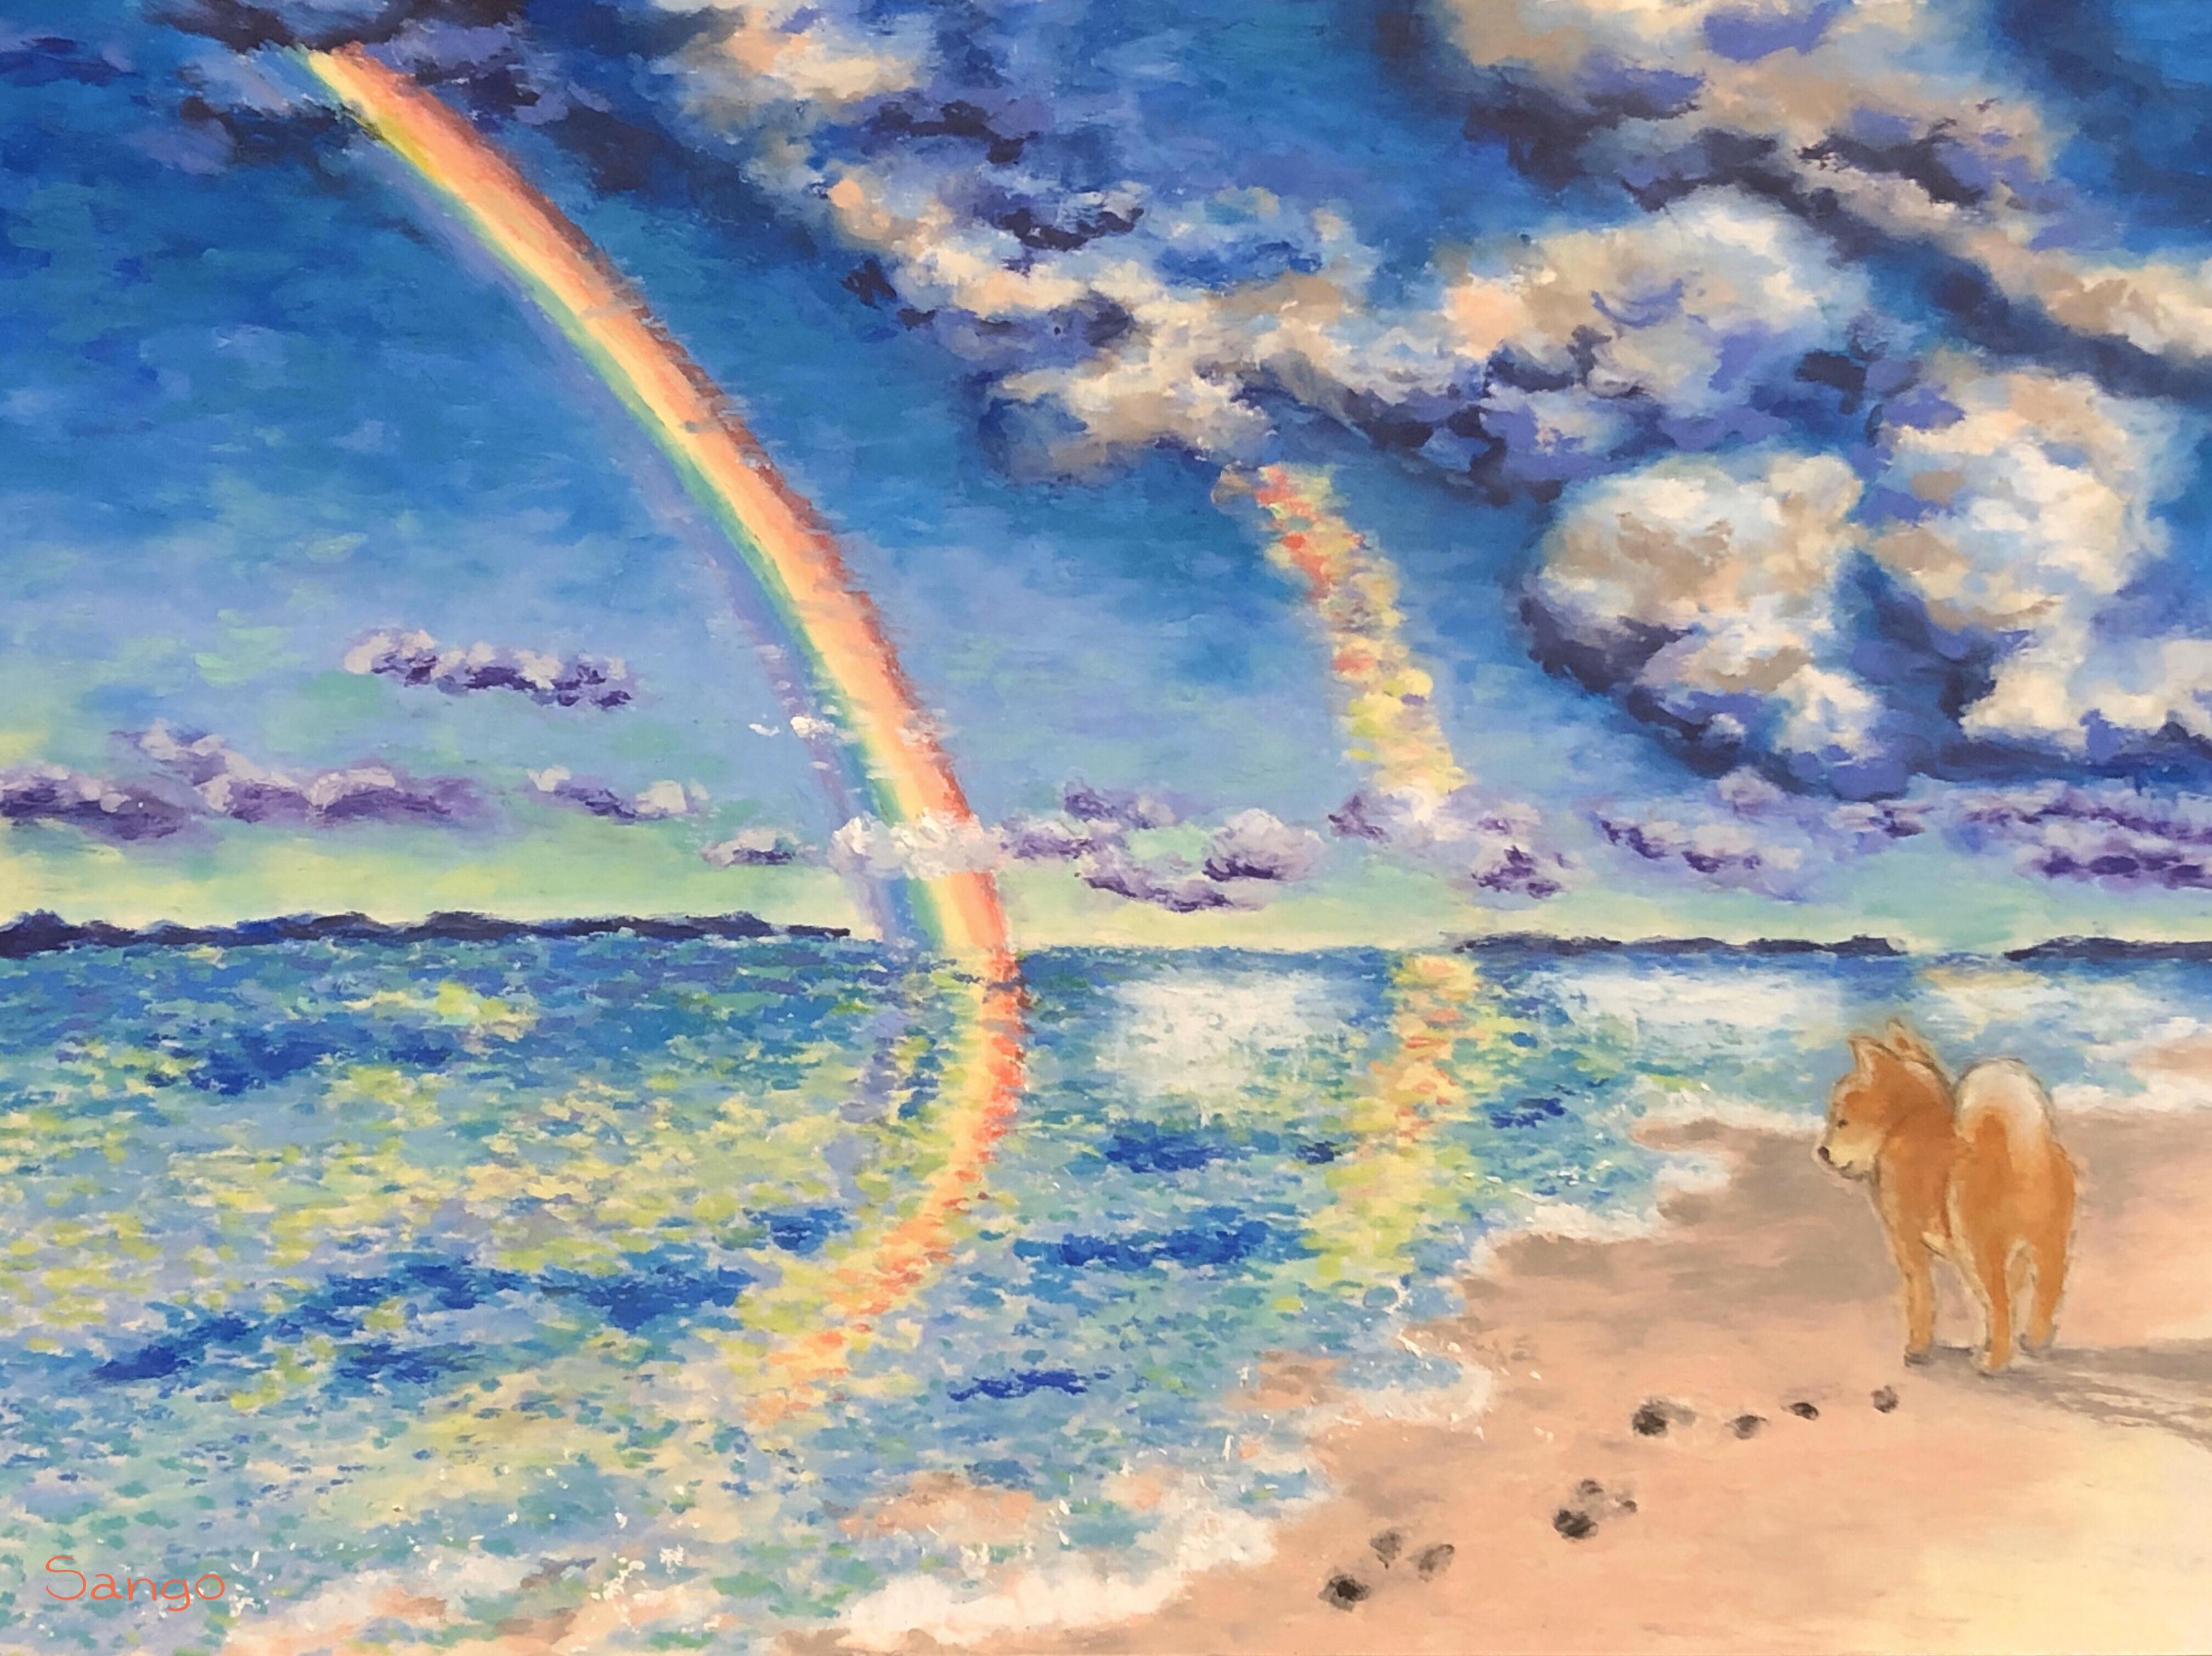 『Beyond the Rainbow』插画图片壁纸